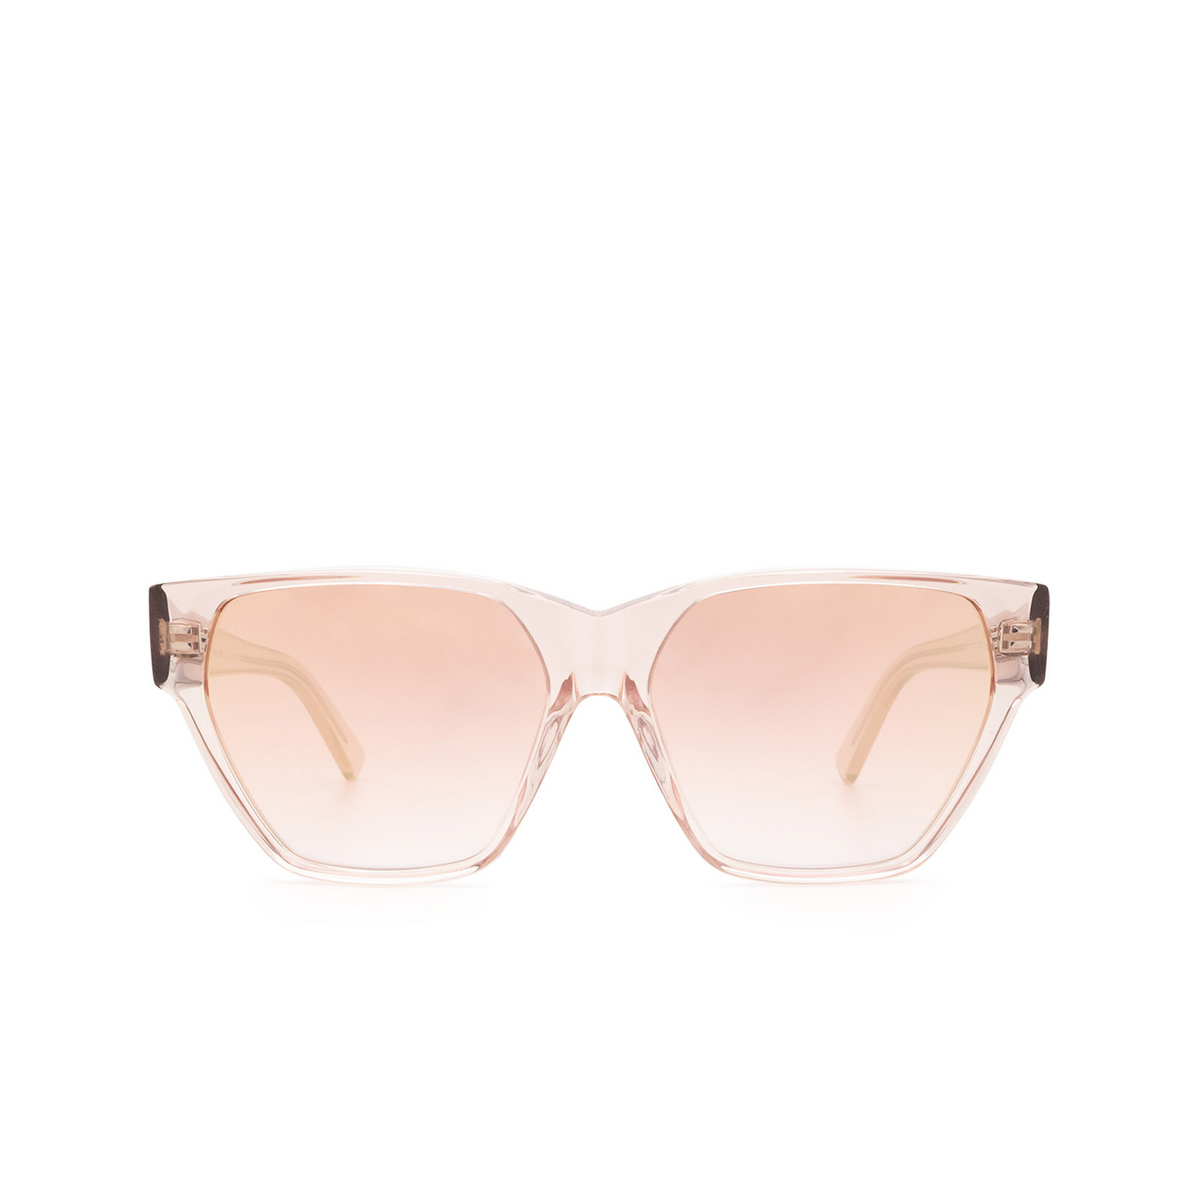 Sportmax® Square Sunglasses: SM0038 color Light Brown 47U - front view.